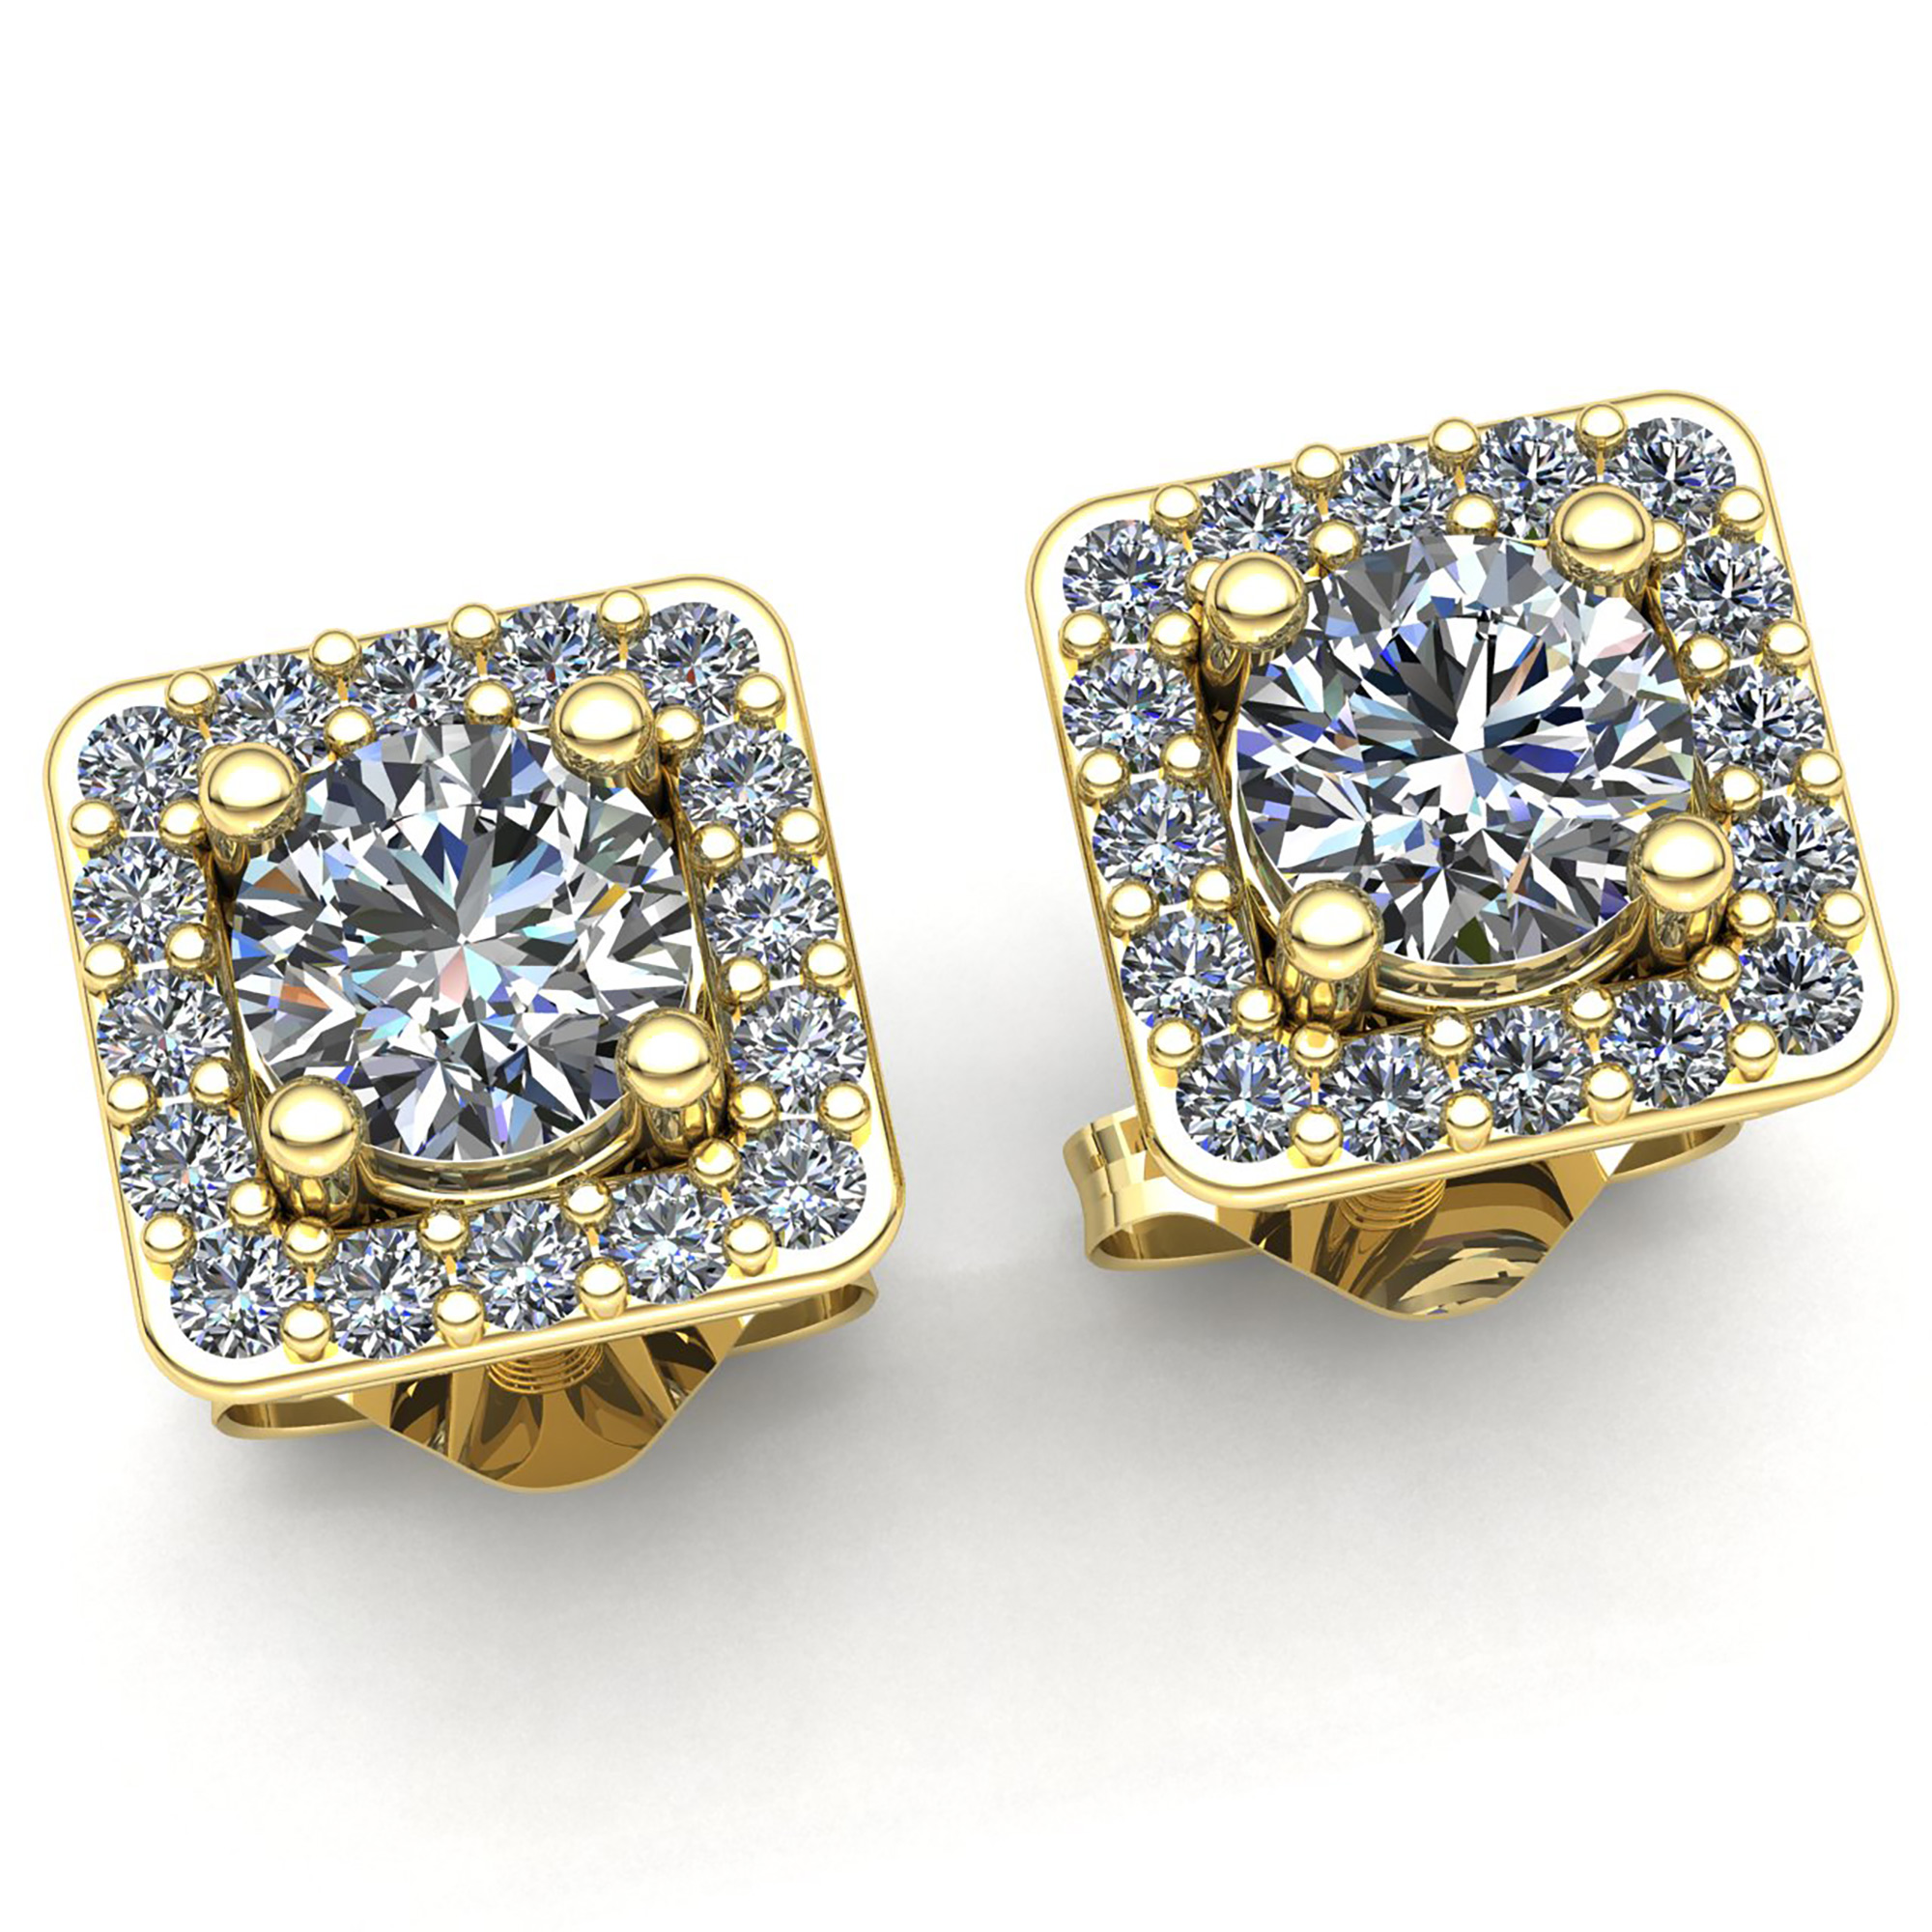 Jewel We Sell Genuine 0.75ctw Round Cut Diamond Ladies Square Stud Earrings 14K White, Yellow or Rose Gold FG VS